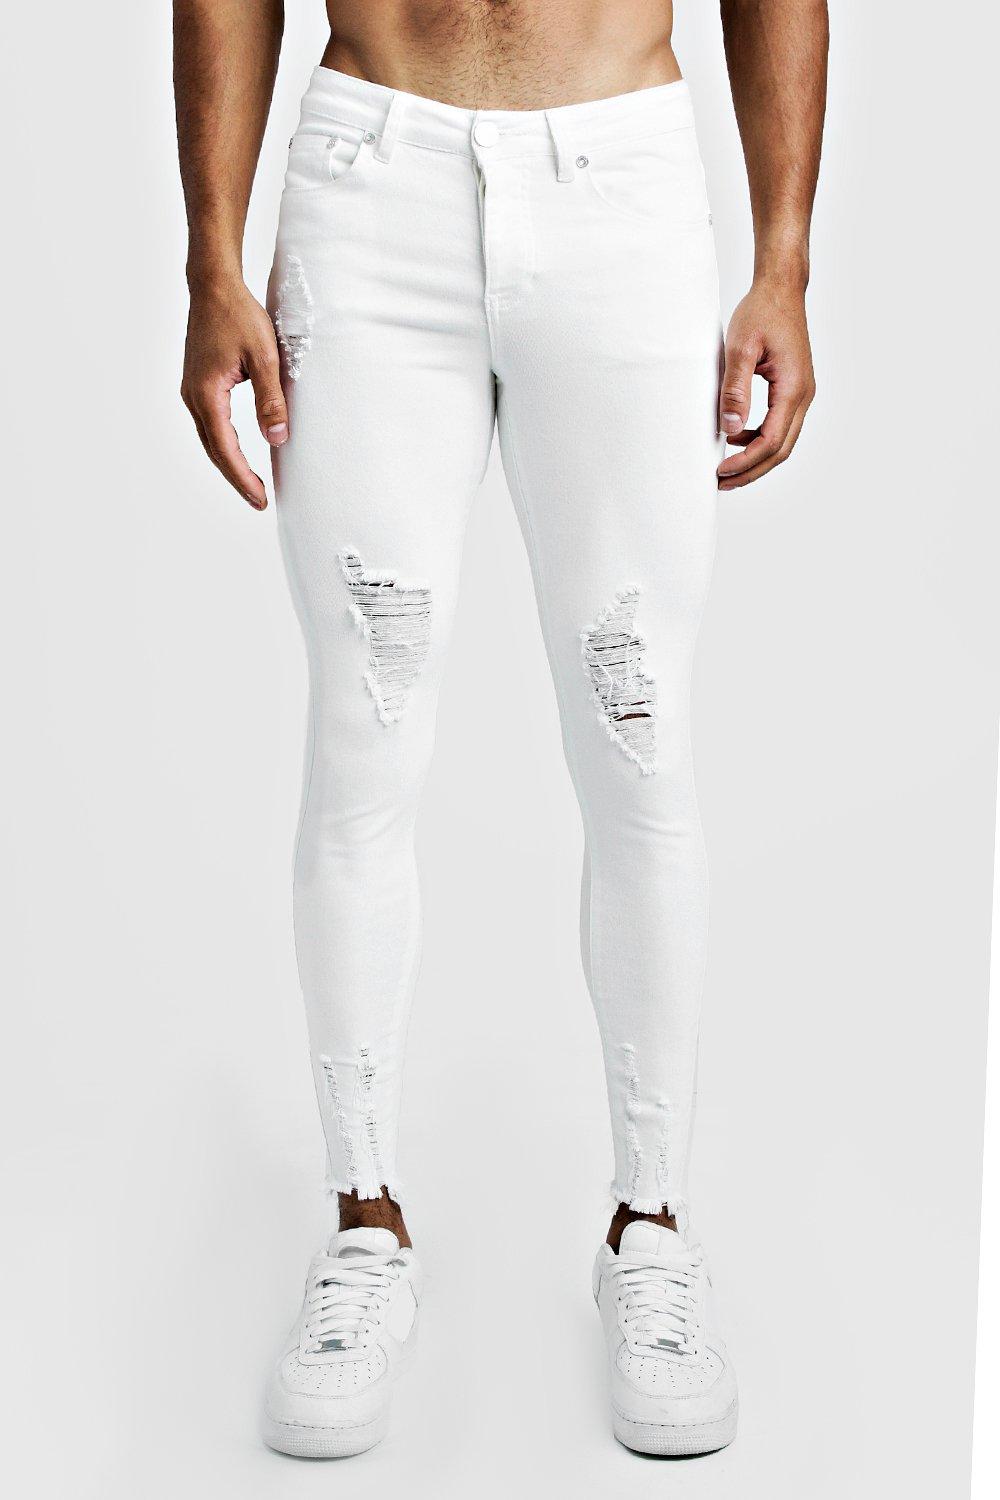 boohoo white jeans